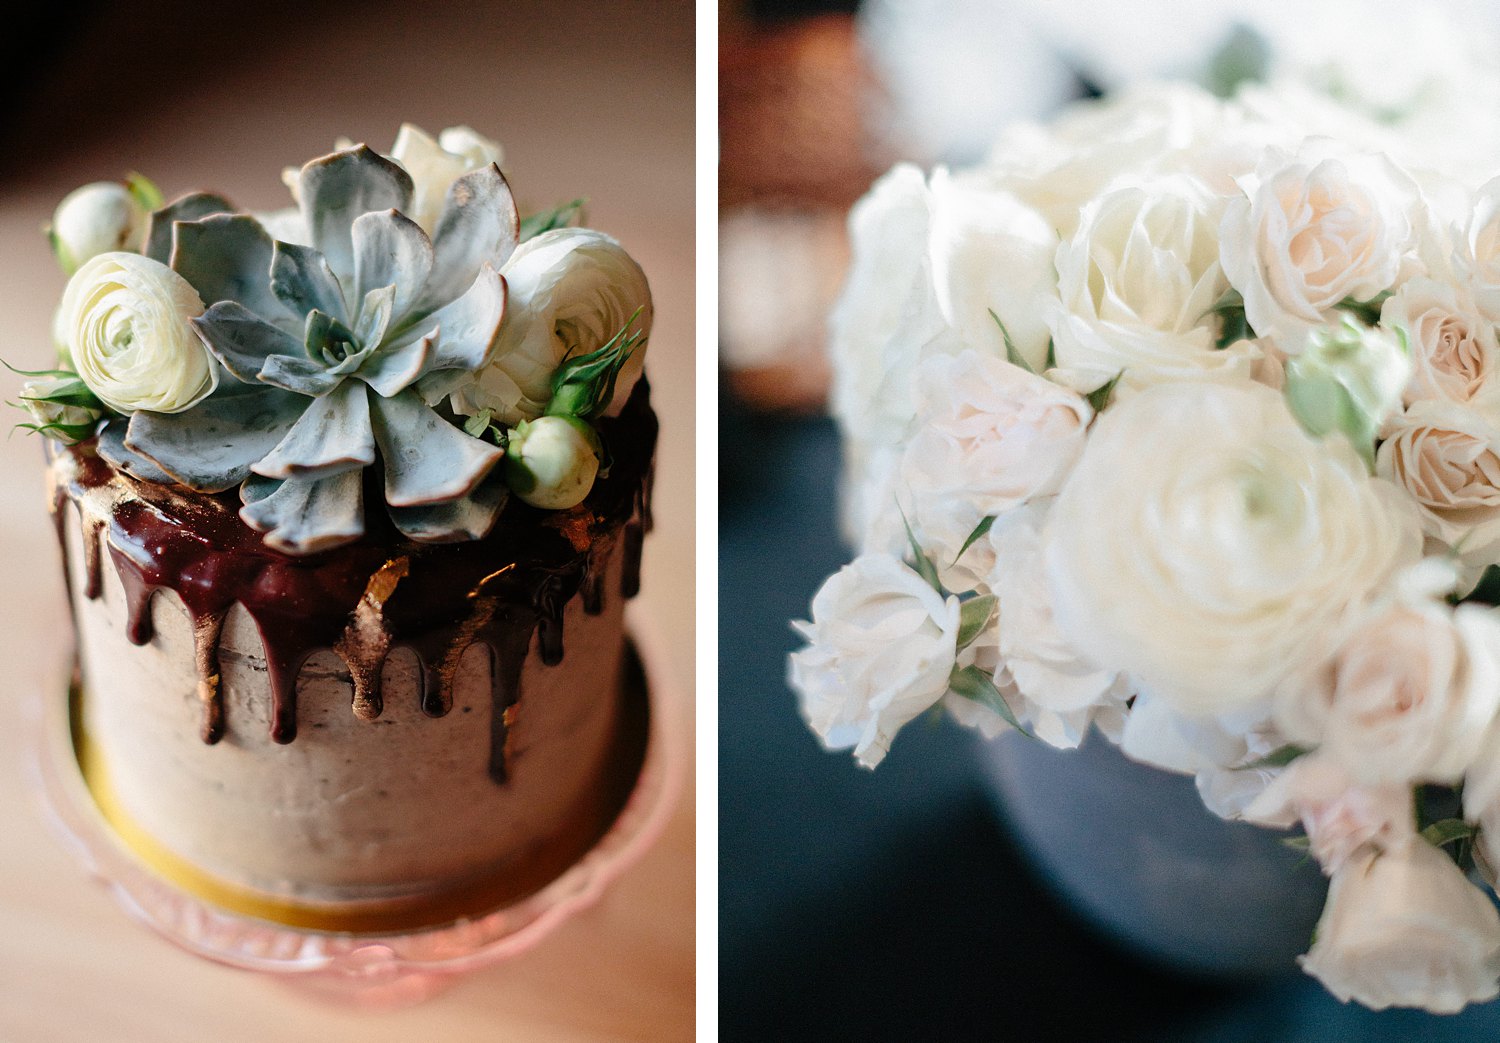 White flower arrangement and cake at wedding reception in Houston